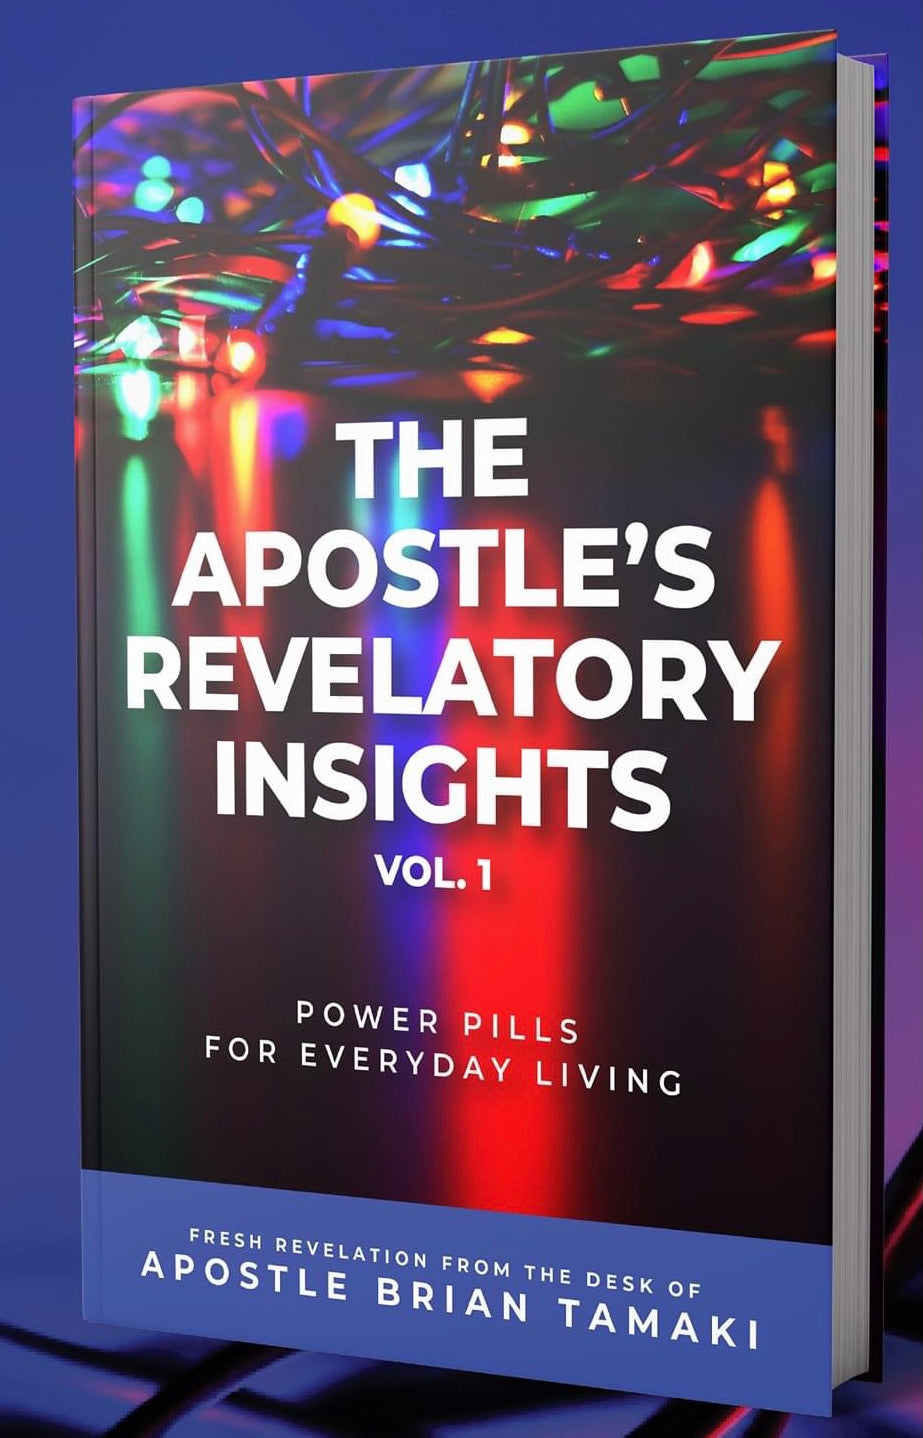 The Apostle's Revelatory Insights Vol. 1